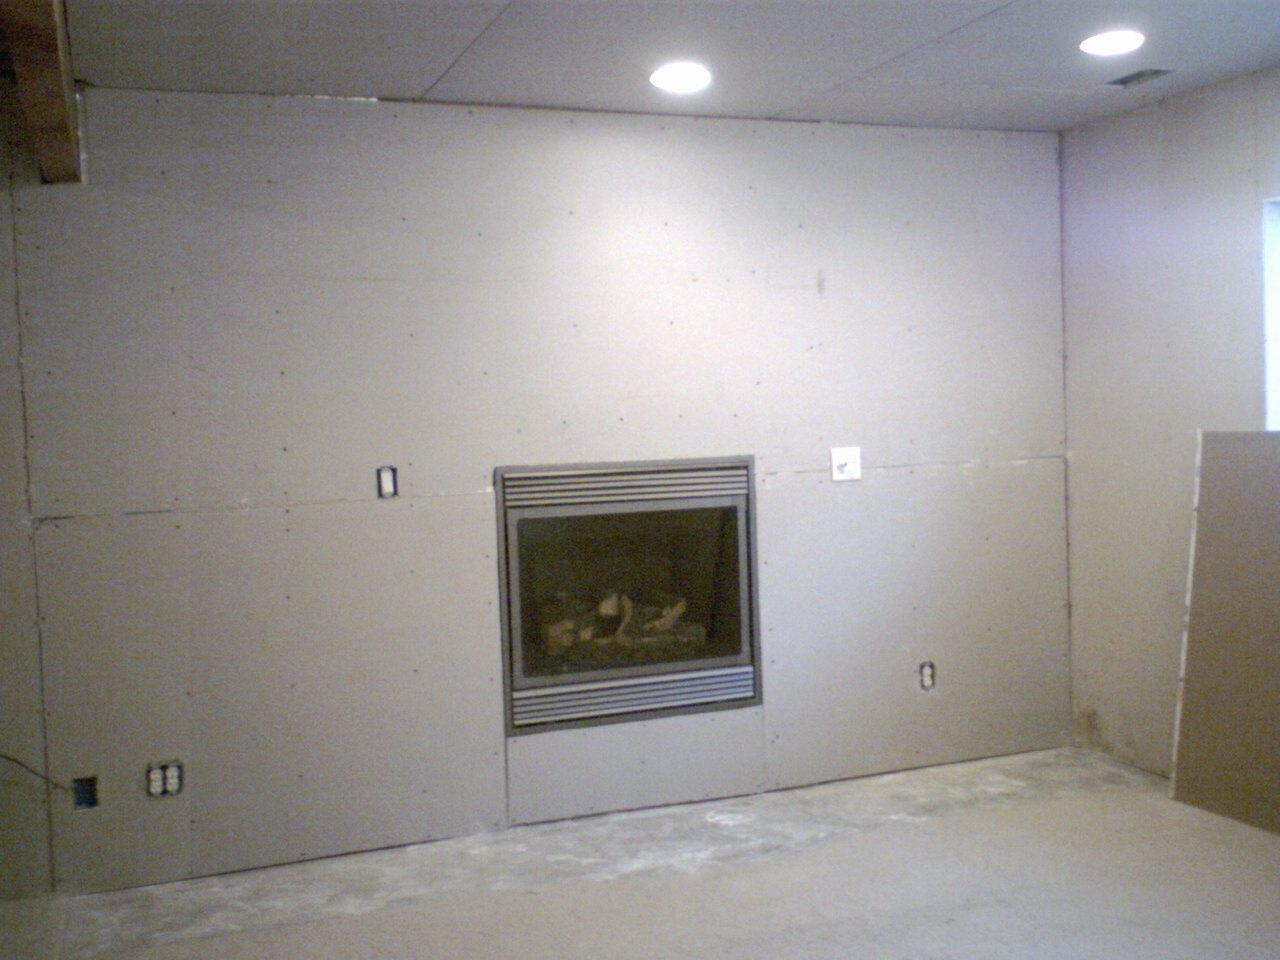 Tile On Drywall Ceiling